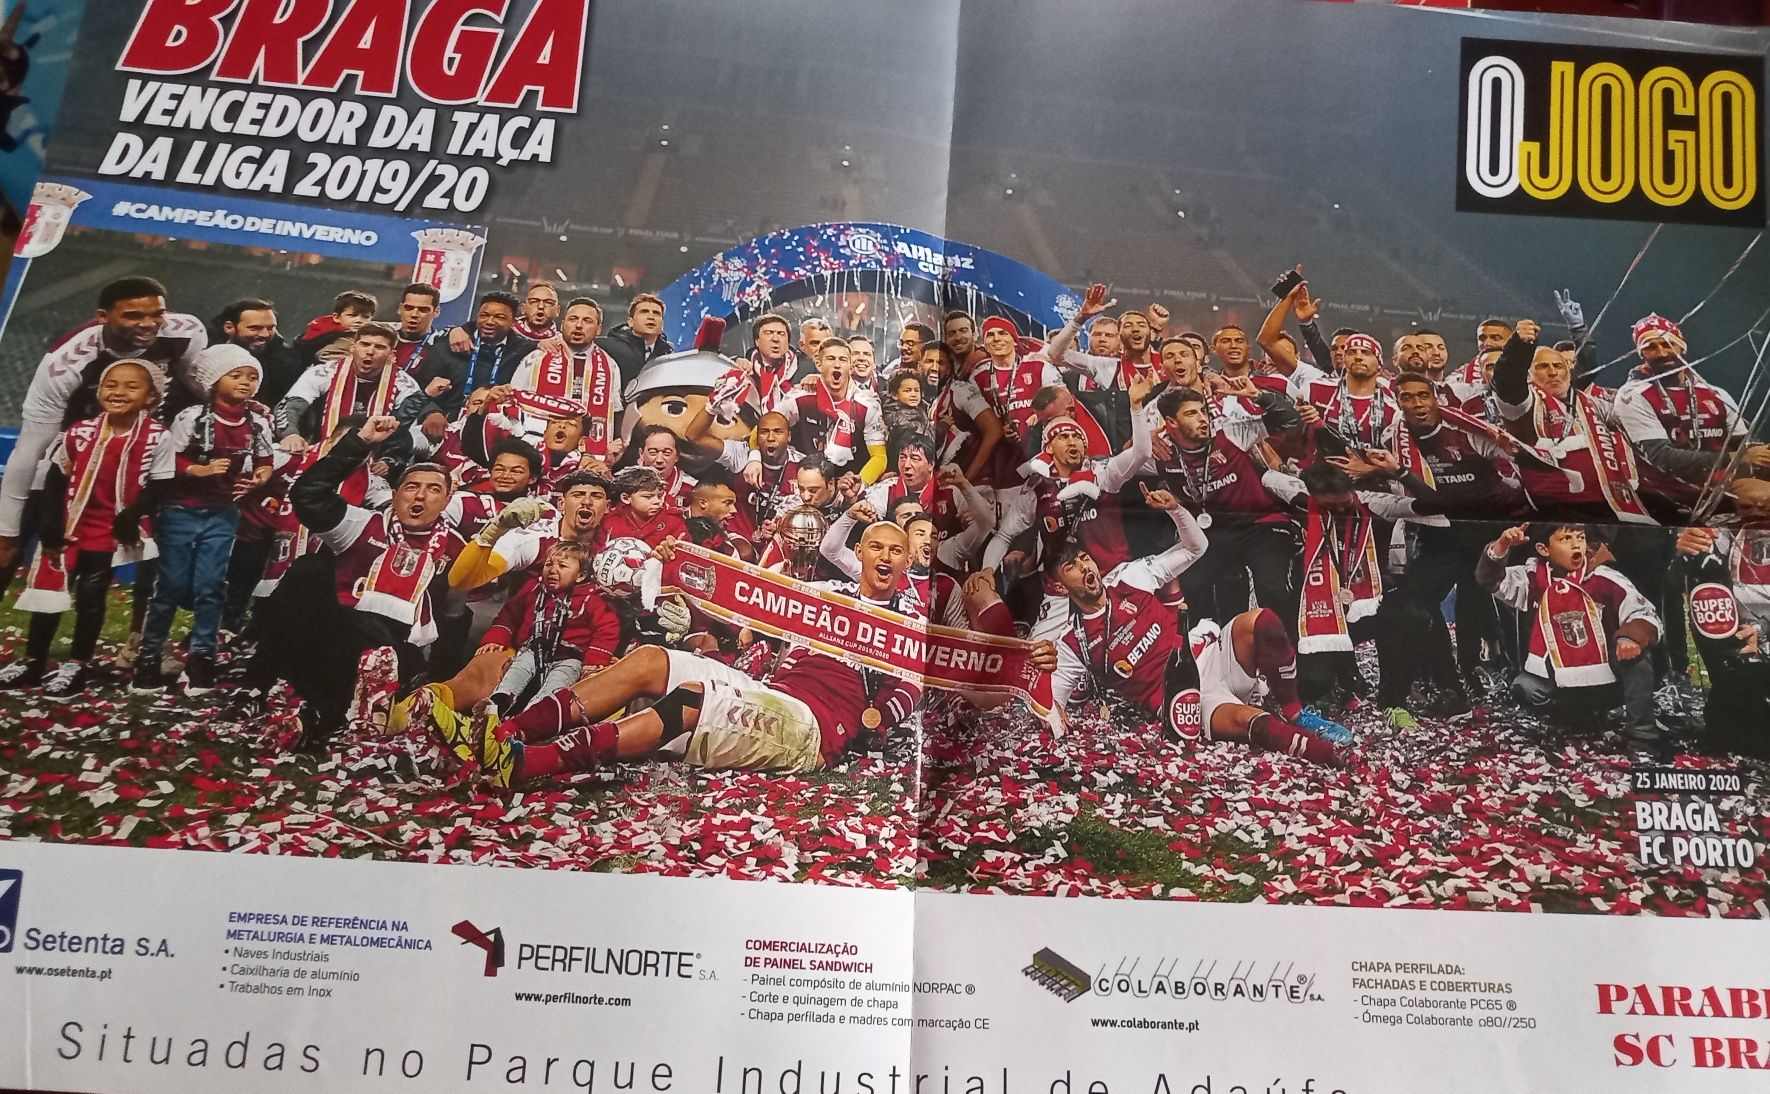 poster SCBraga vencedor da Taça da Liga 2019/20